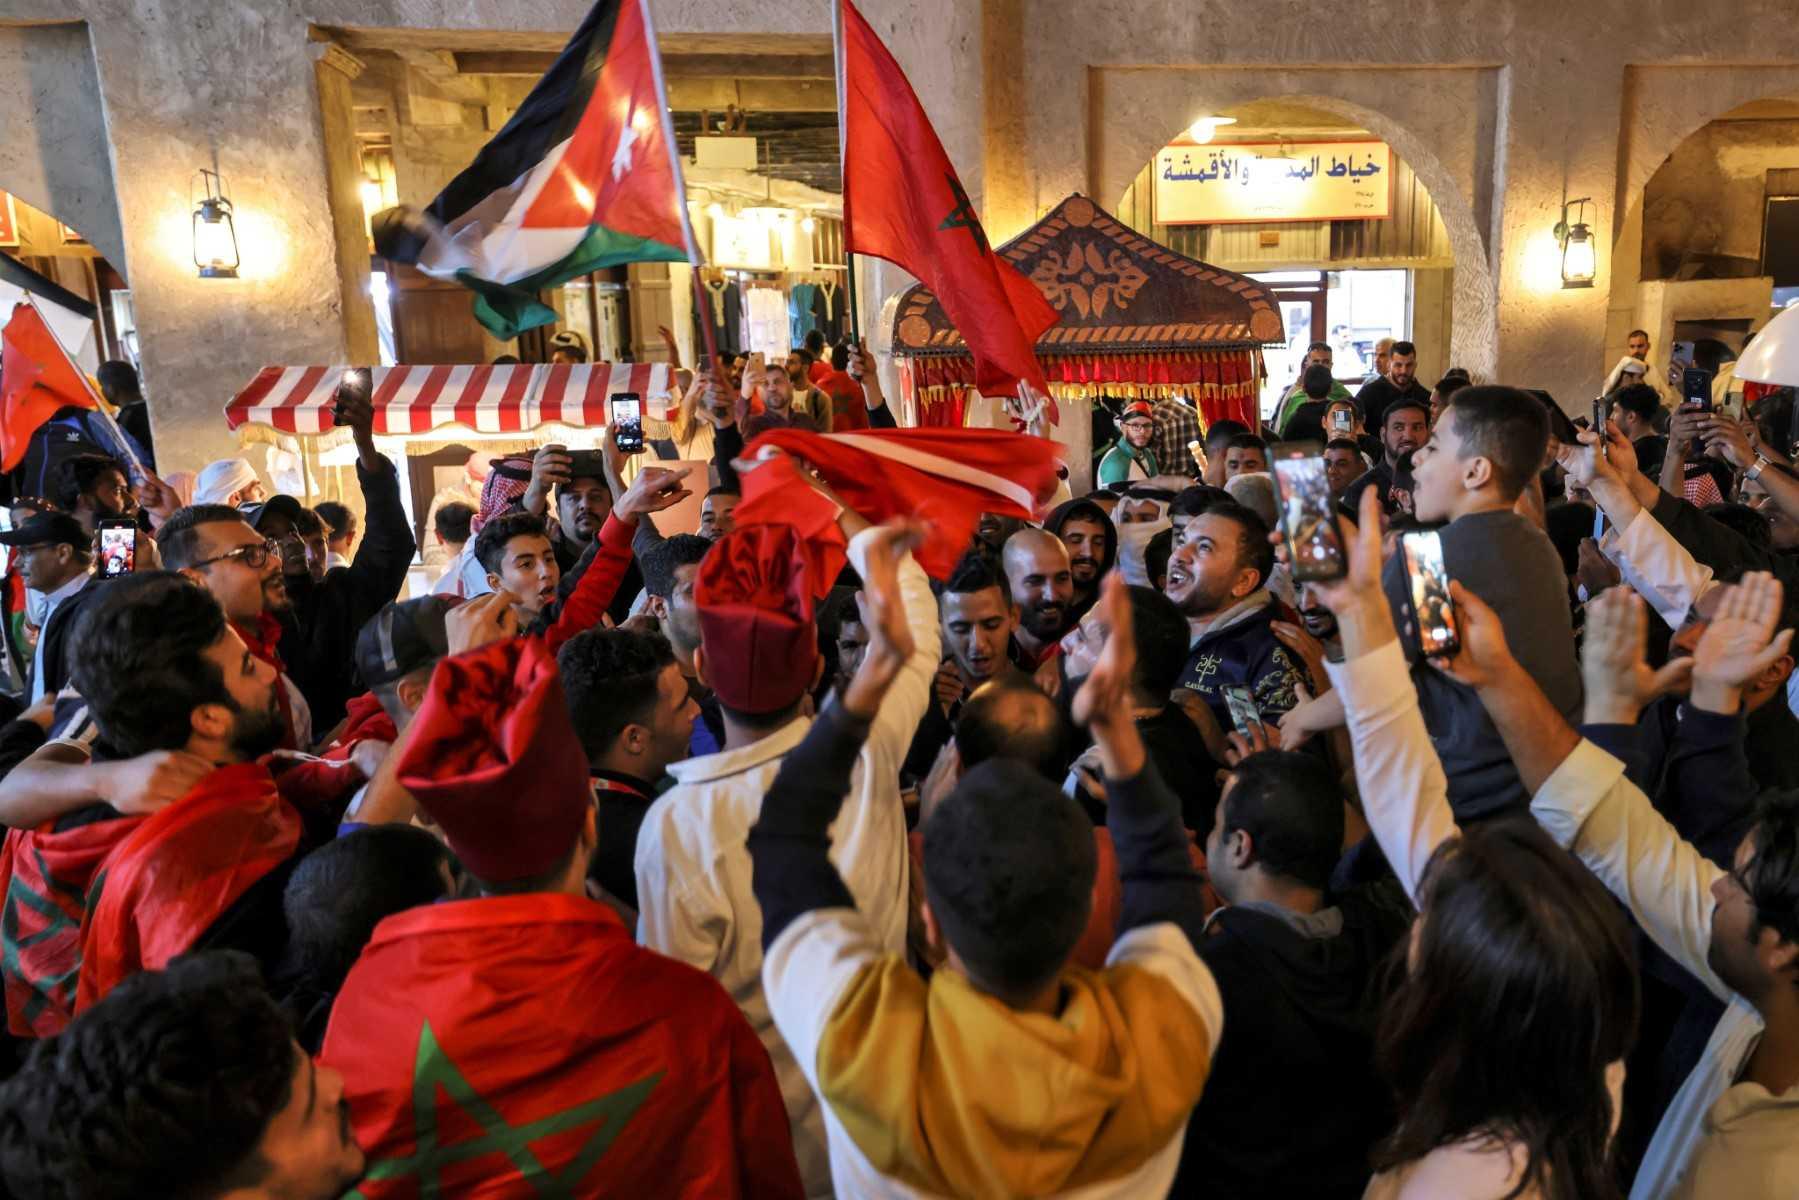 Penyokong meraikan kemenangan Maghribi ke atas Portugal semalam di Souq Waqif di Doha, Qatar. Gambar: AFP